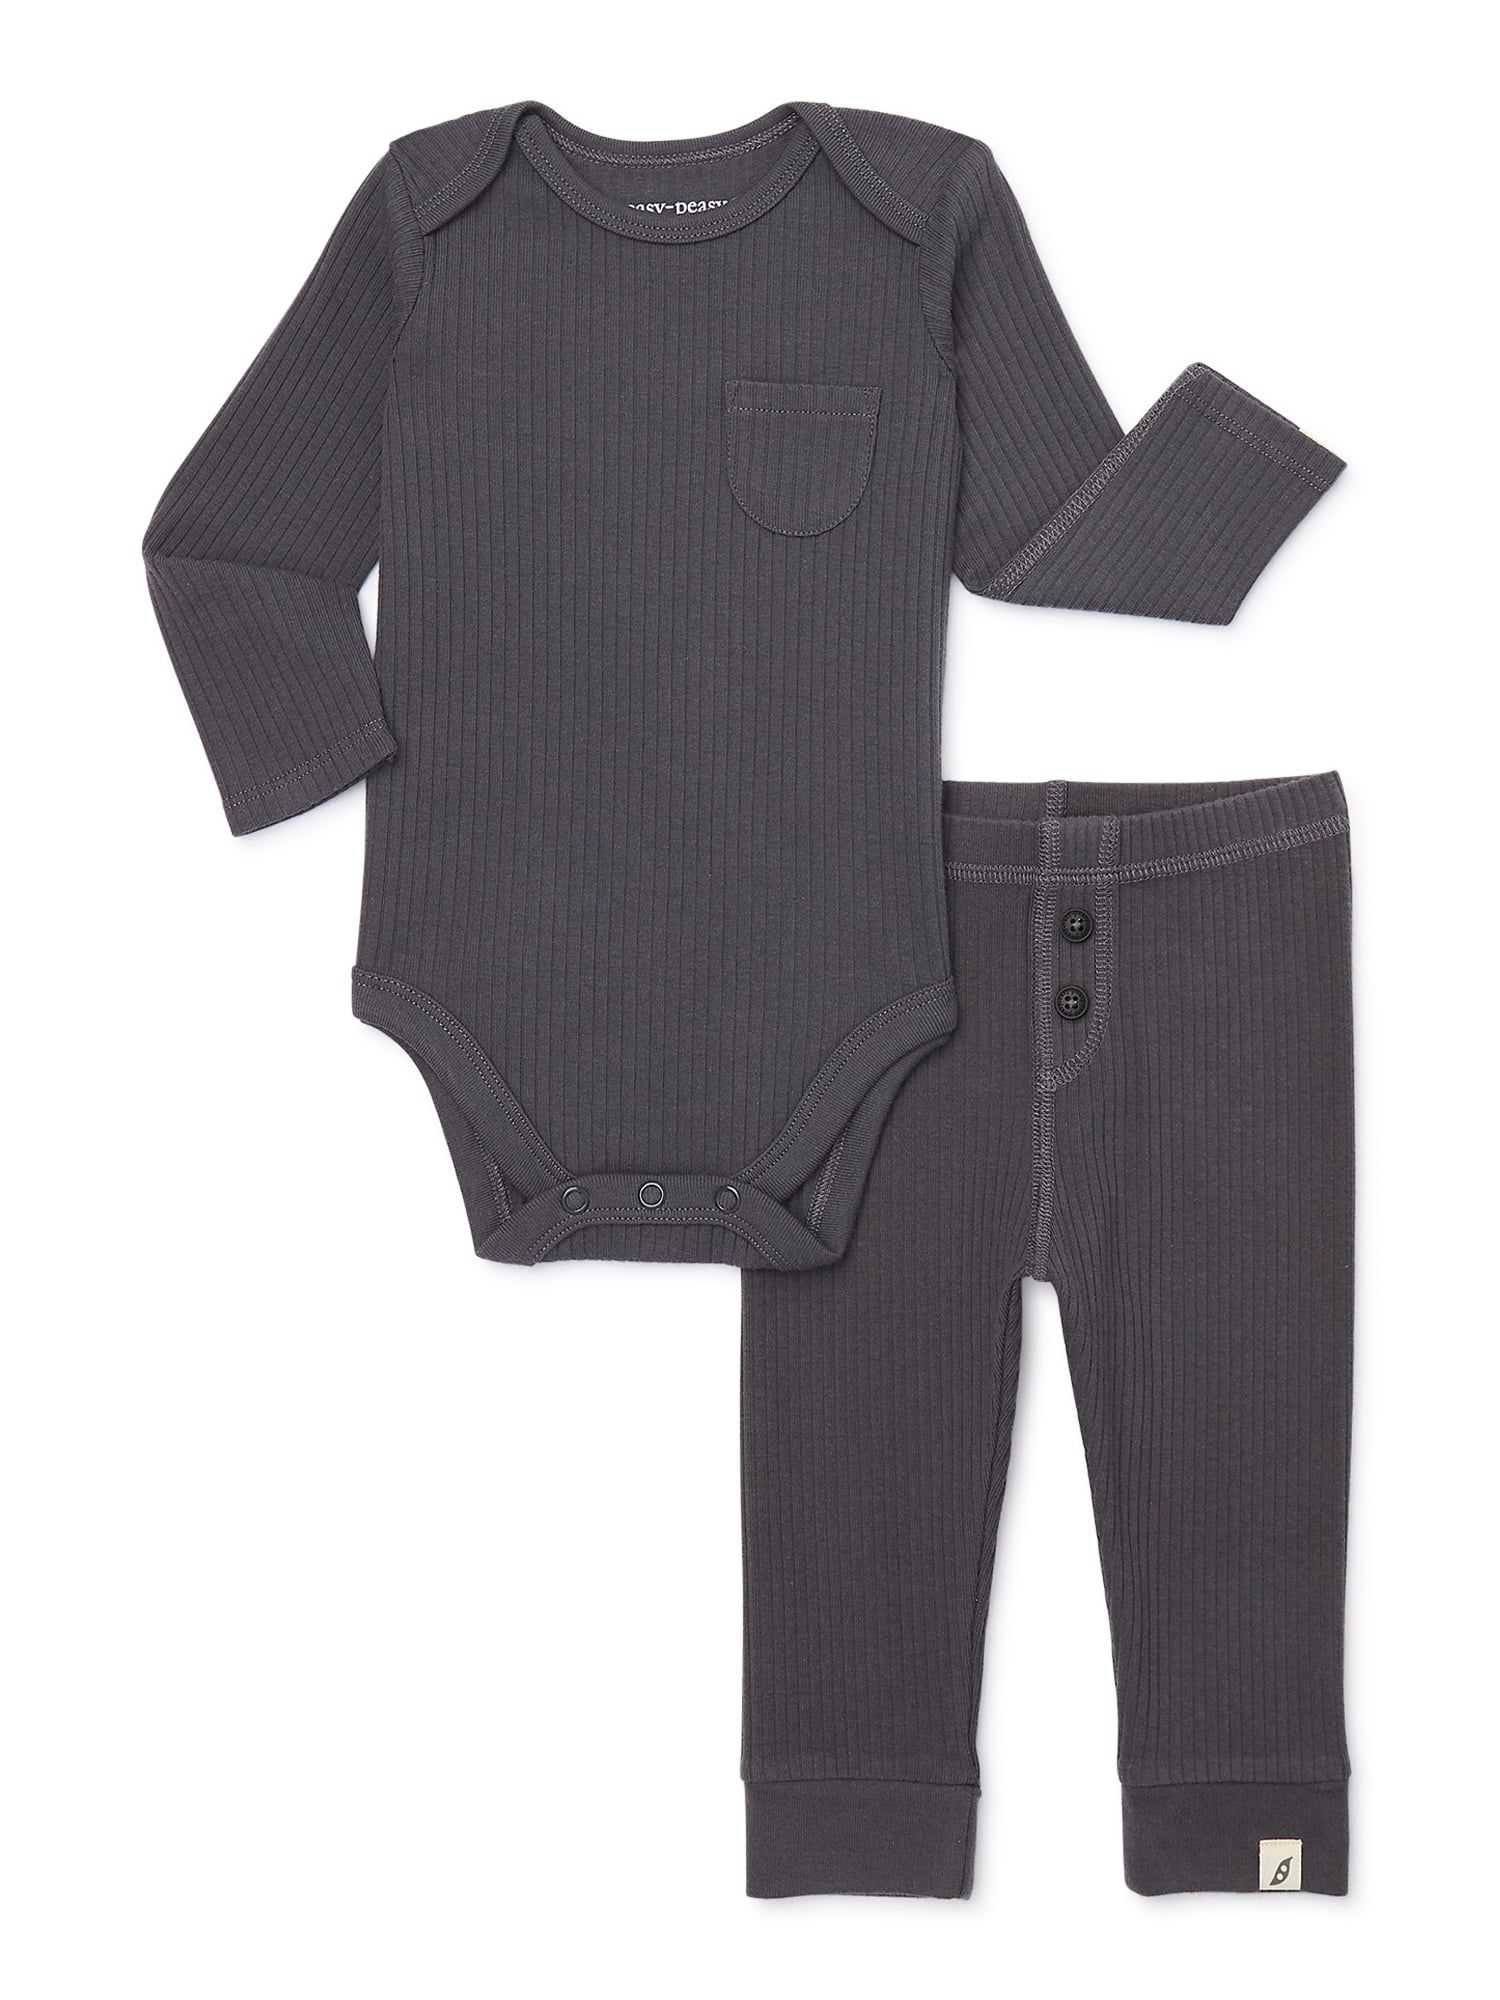 easy-peasy Baby Bodysuit and Leggings Set, 2-Piece, Sizes 0M-24M | Walmart (US)